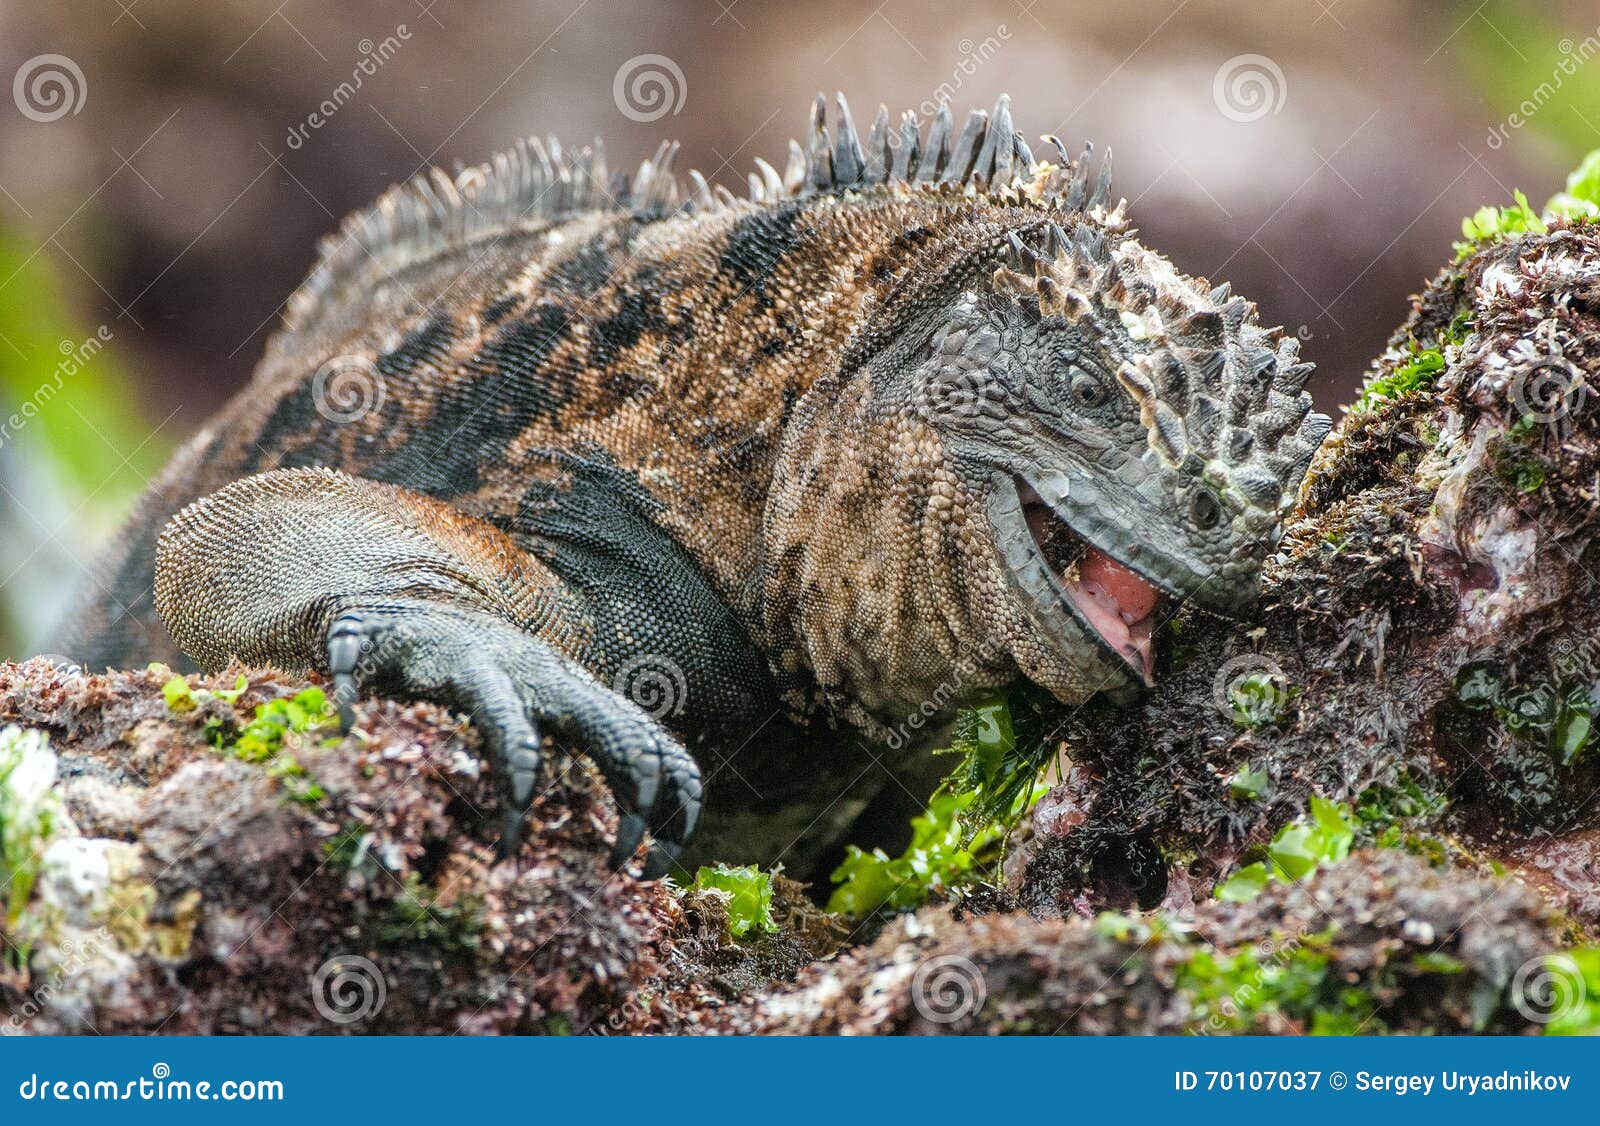 the marine iguana amblyrhynchus cristatus on the stony lava coast. the marine iguana (amblyrhynchus cristatus) eats seaw